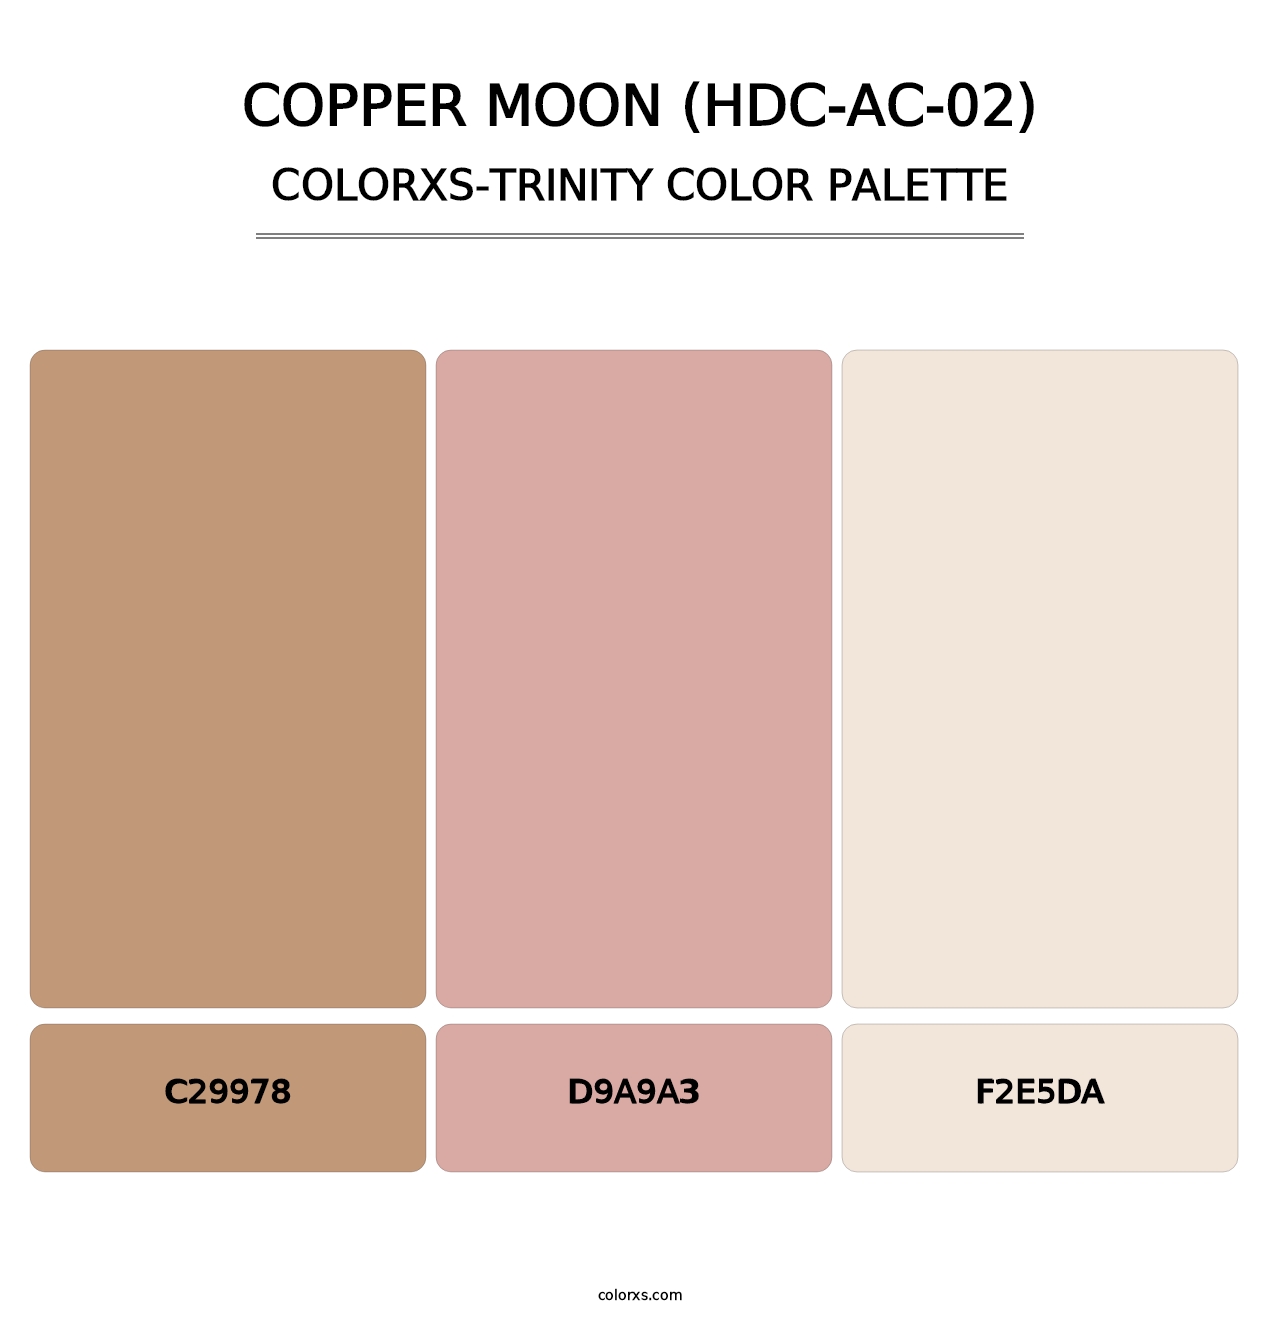 Copper Moon (HDC-AC-02) - Colorxs Trinity Palette